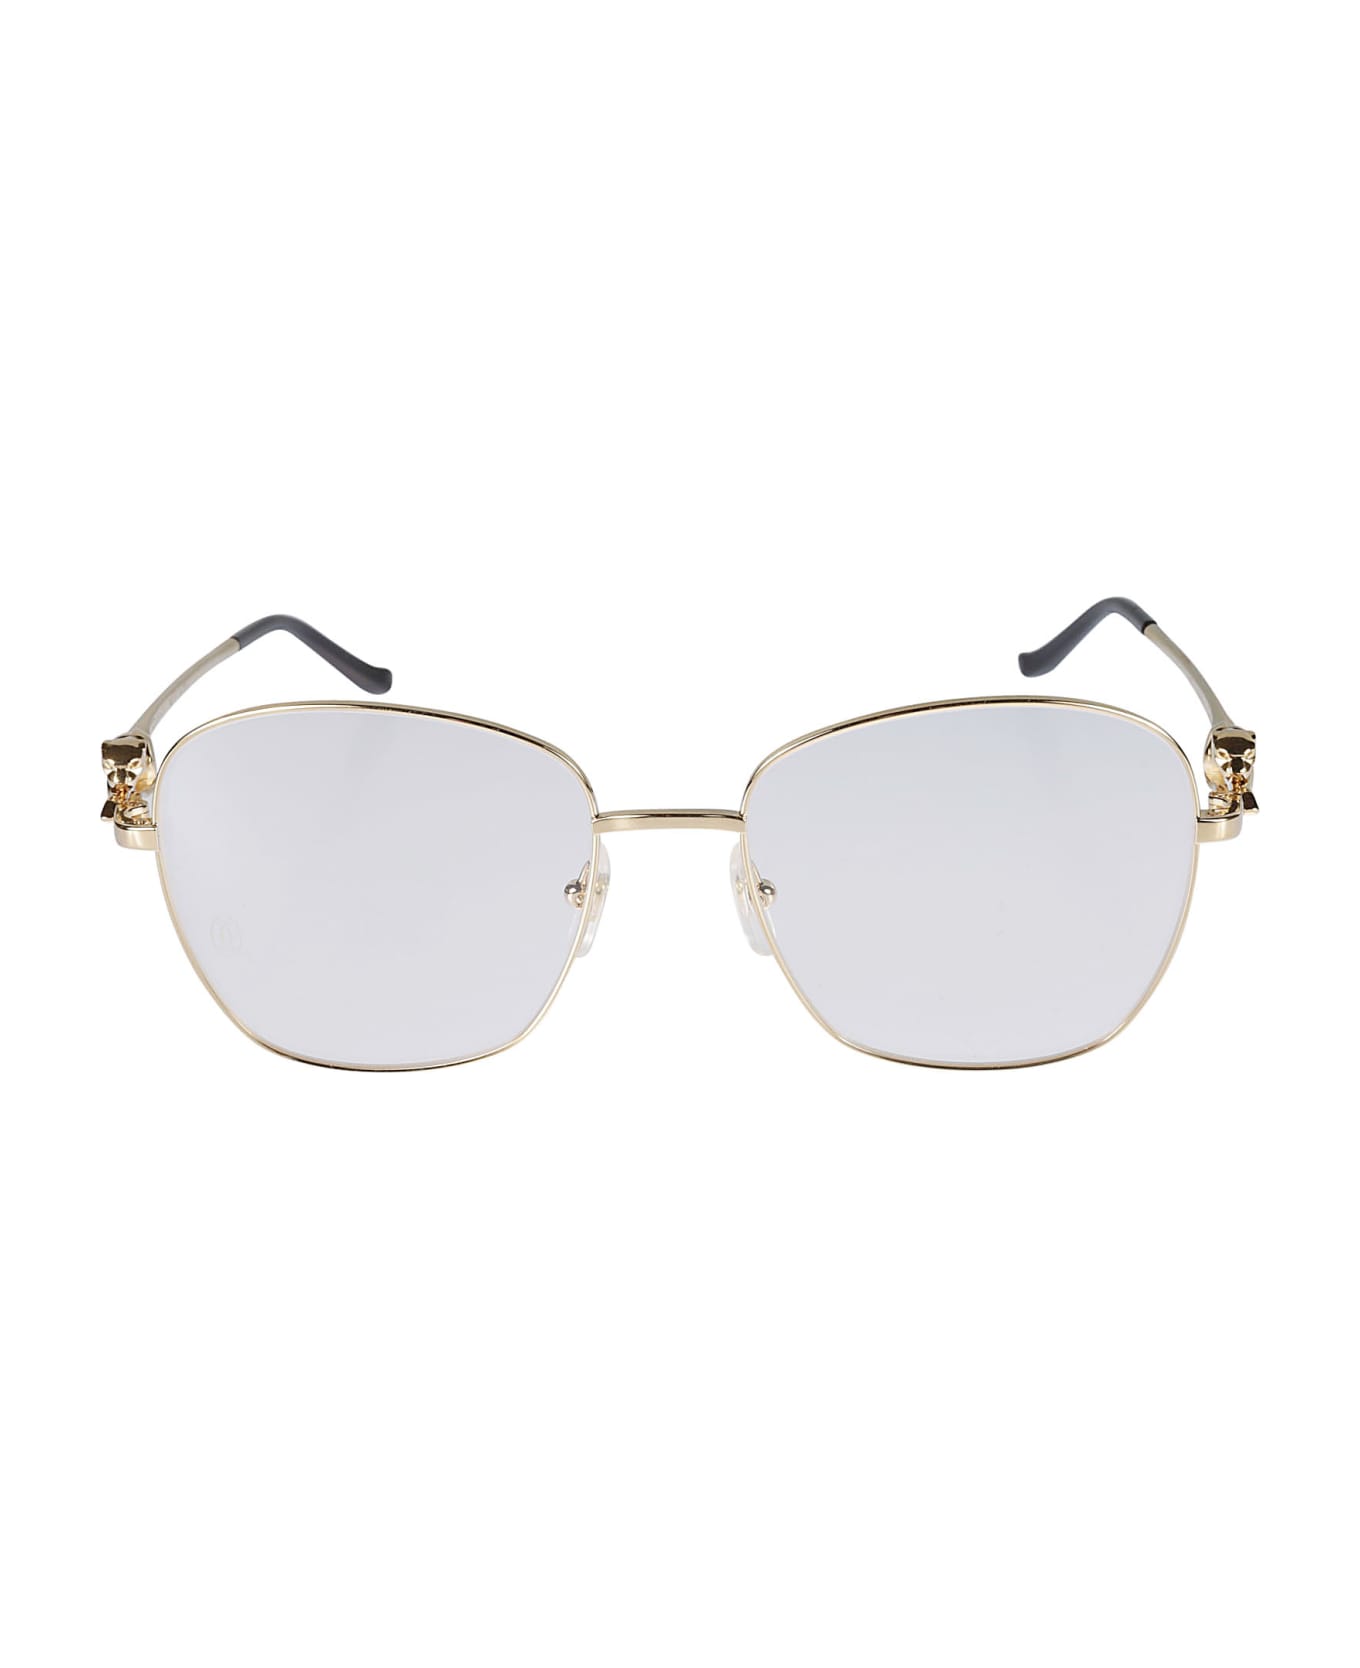 Cartier Eyewear Classic Optical Glasses - Gold